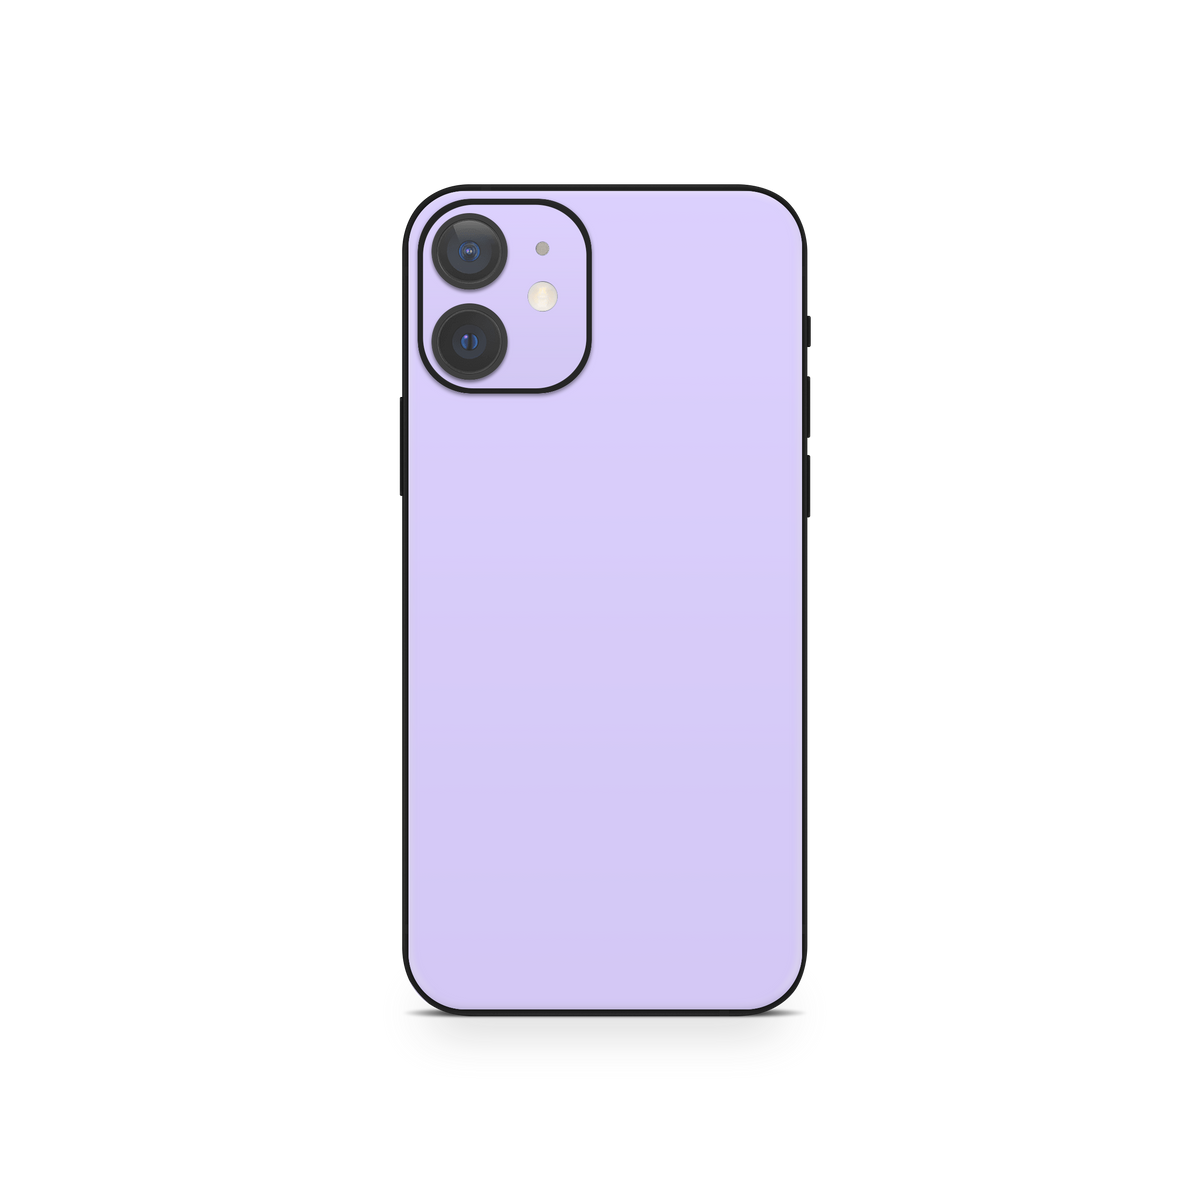 Apple iPhone 12 Light Lavender iPhone 12 Skin